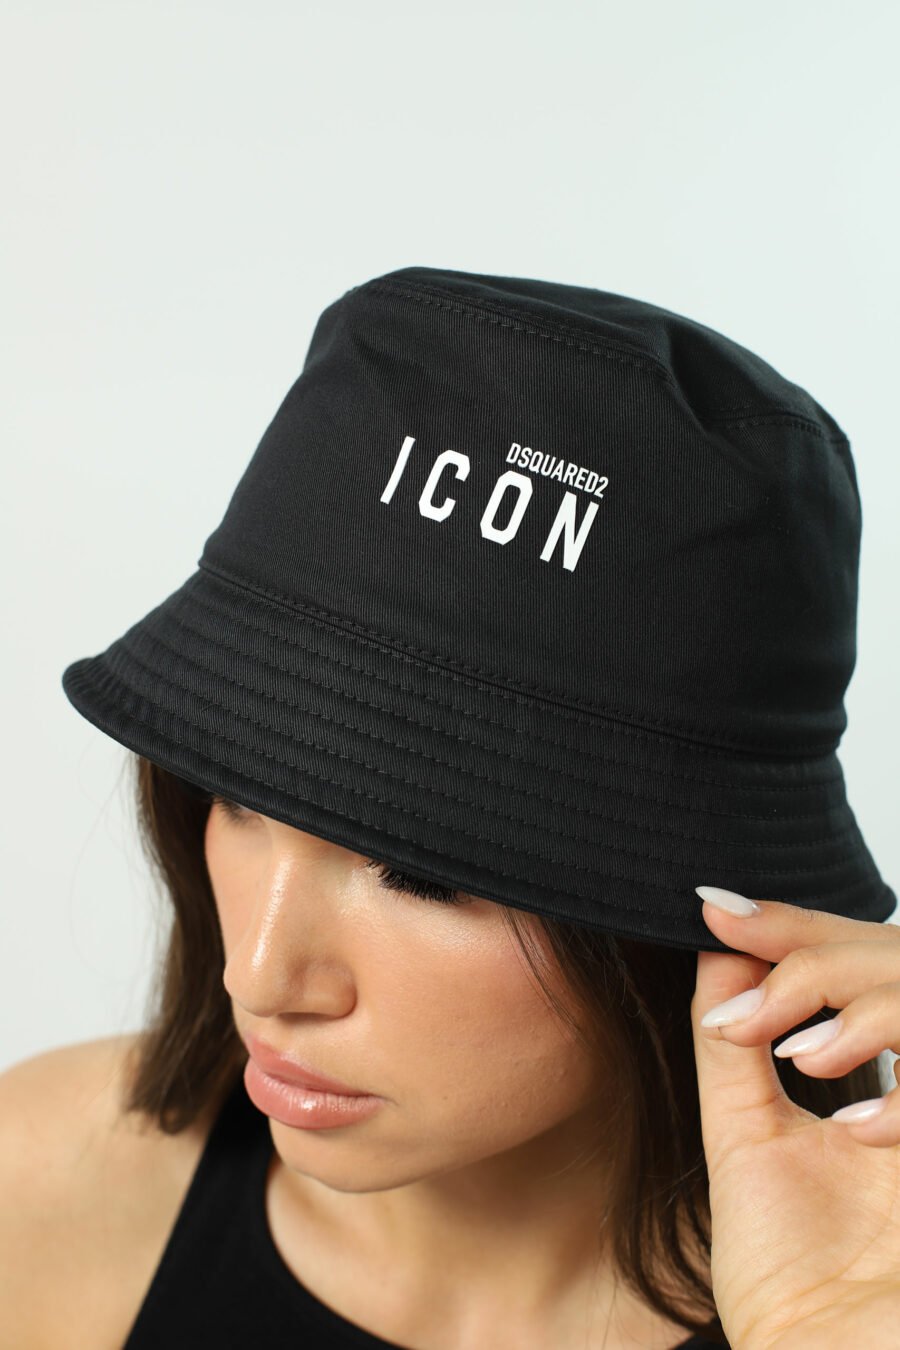 Black fisherman's hat with "icon" logo - Photos 2533